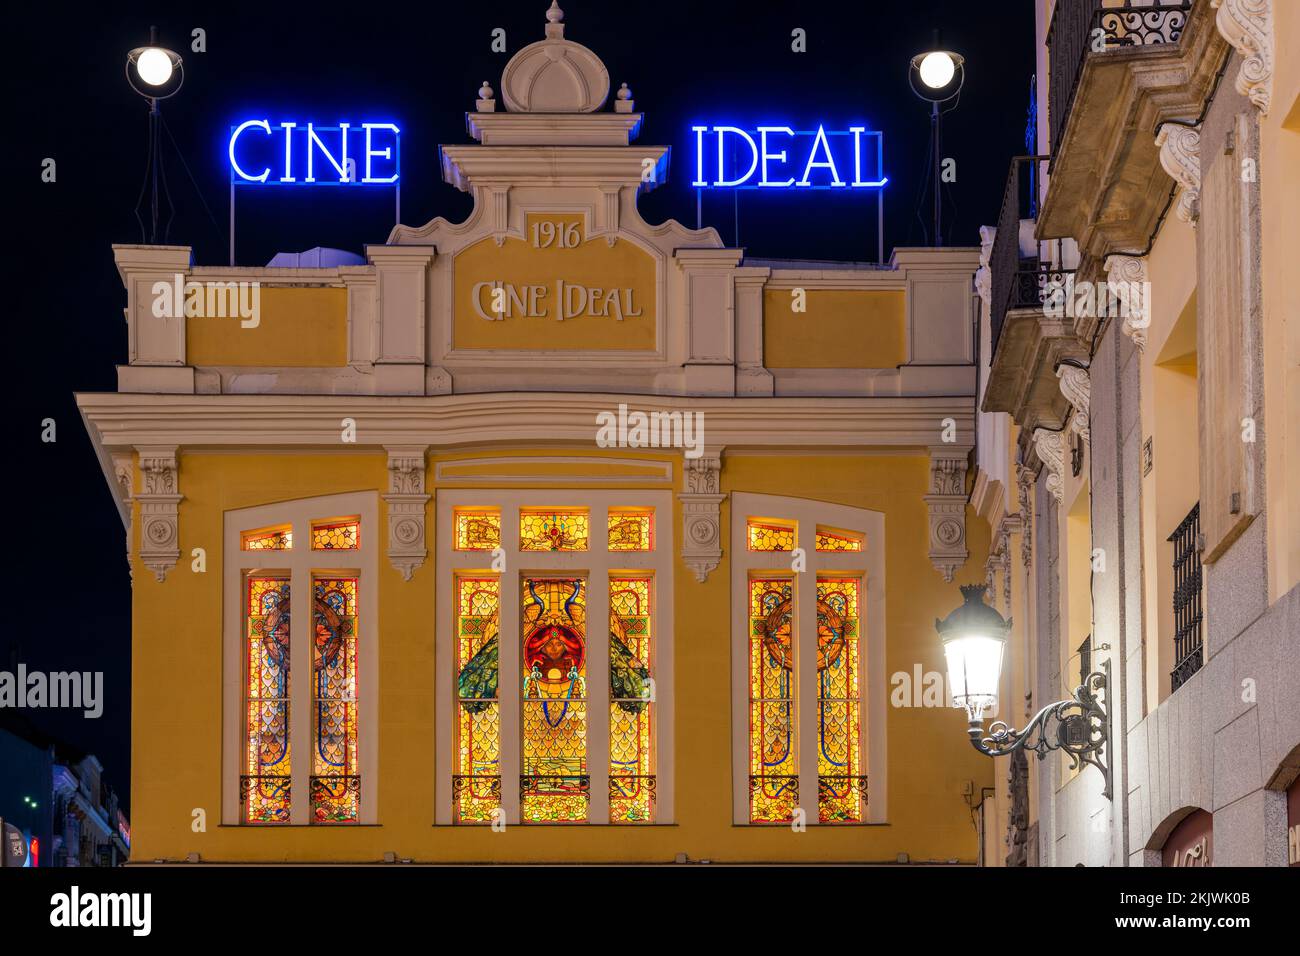 Cine Ideal cinema, Madrid, Spain Stock Photo